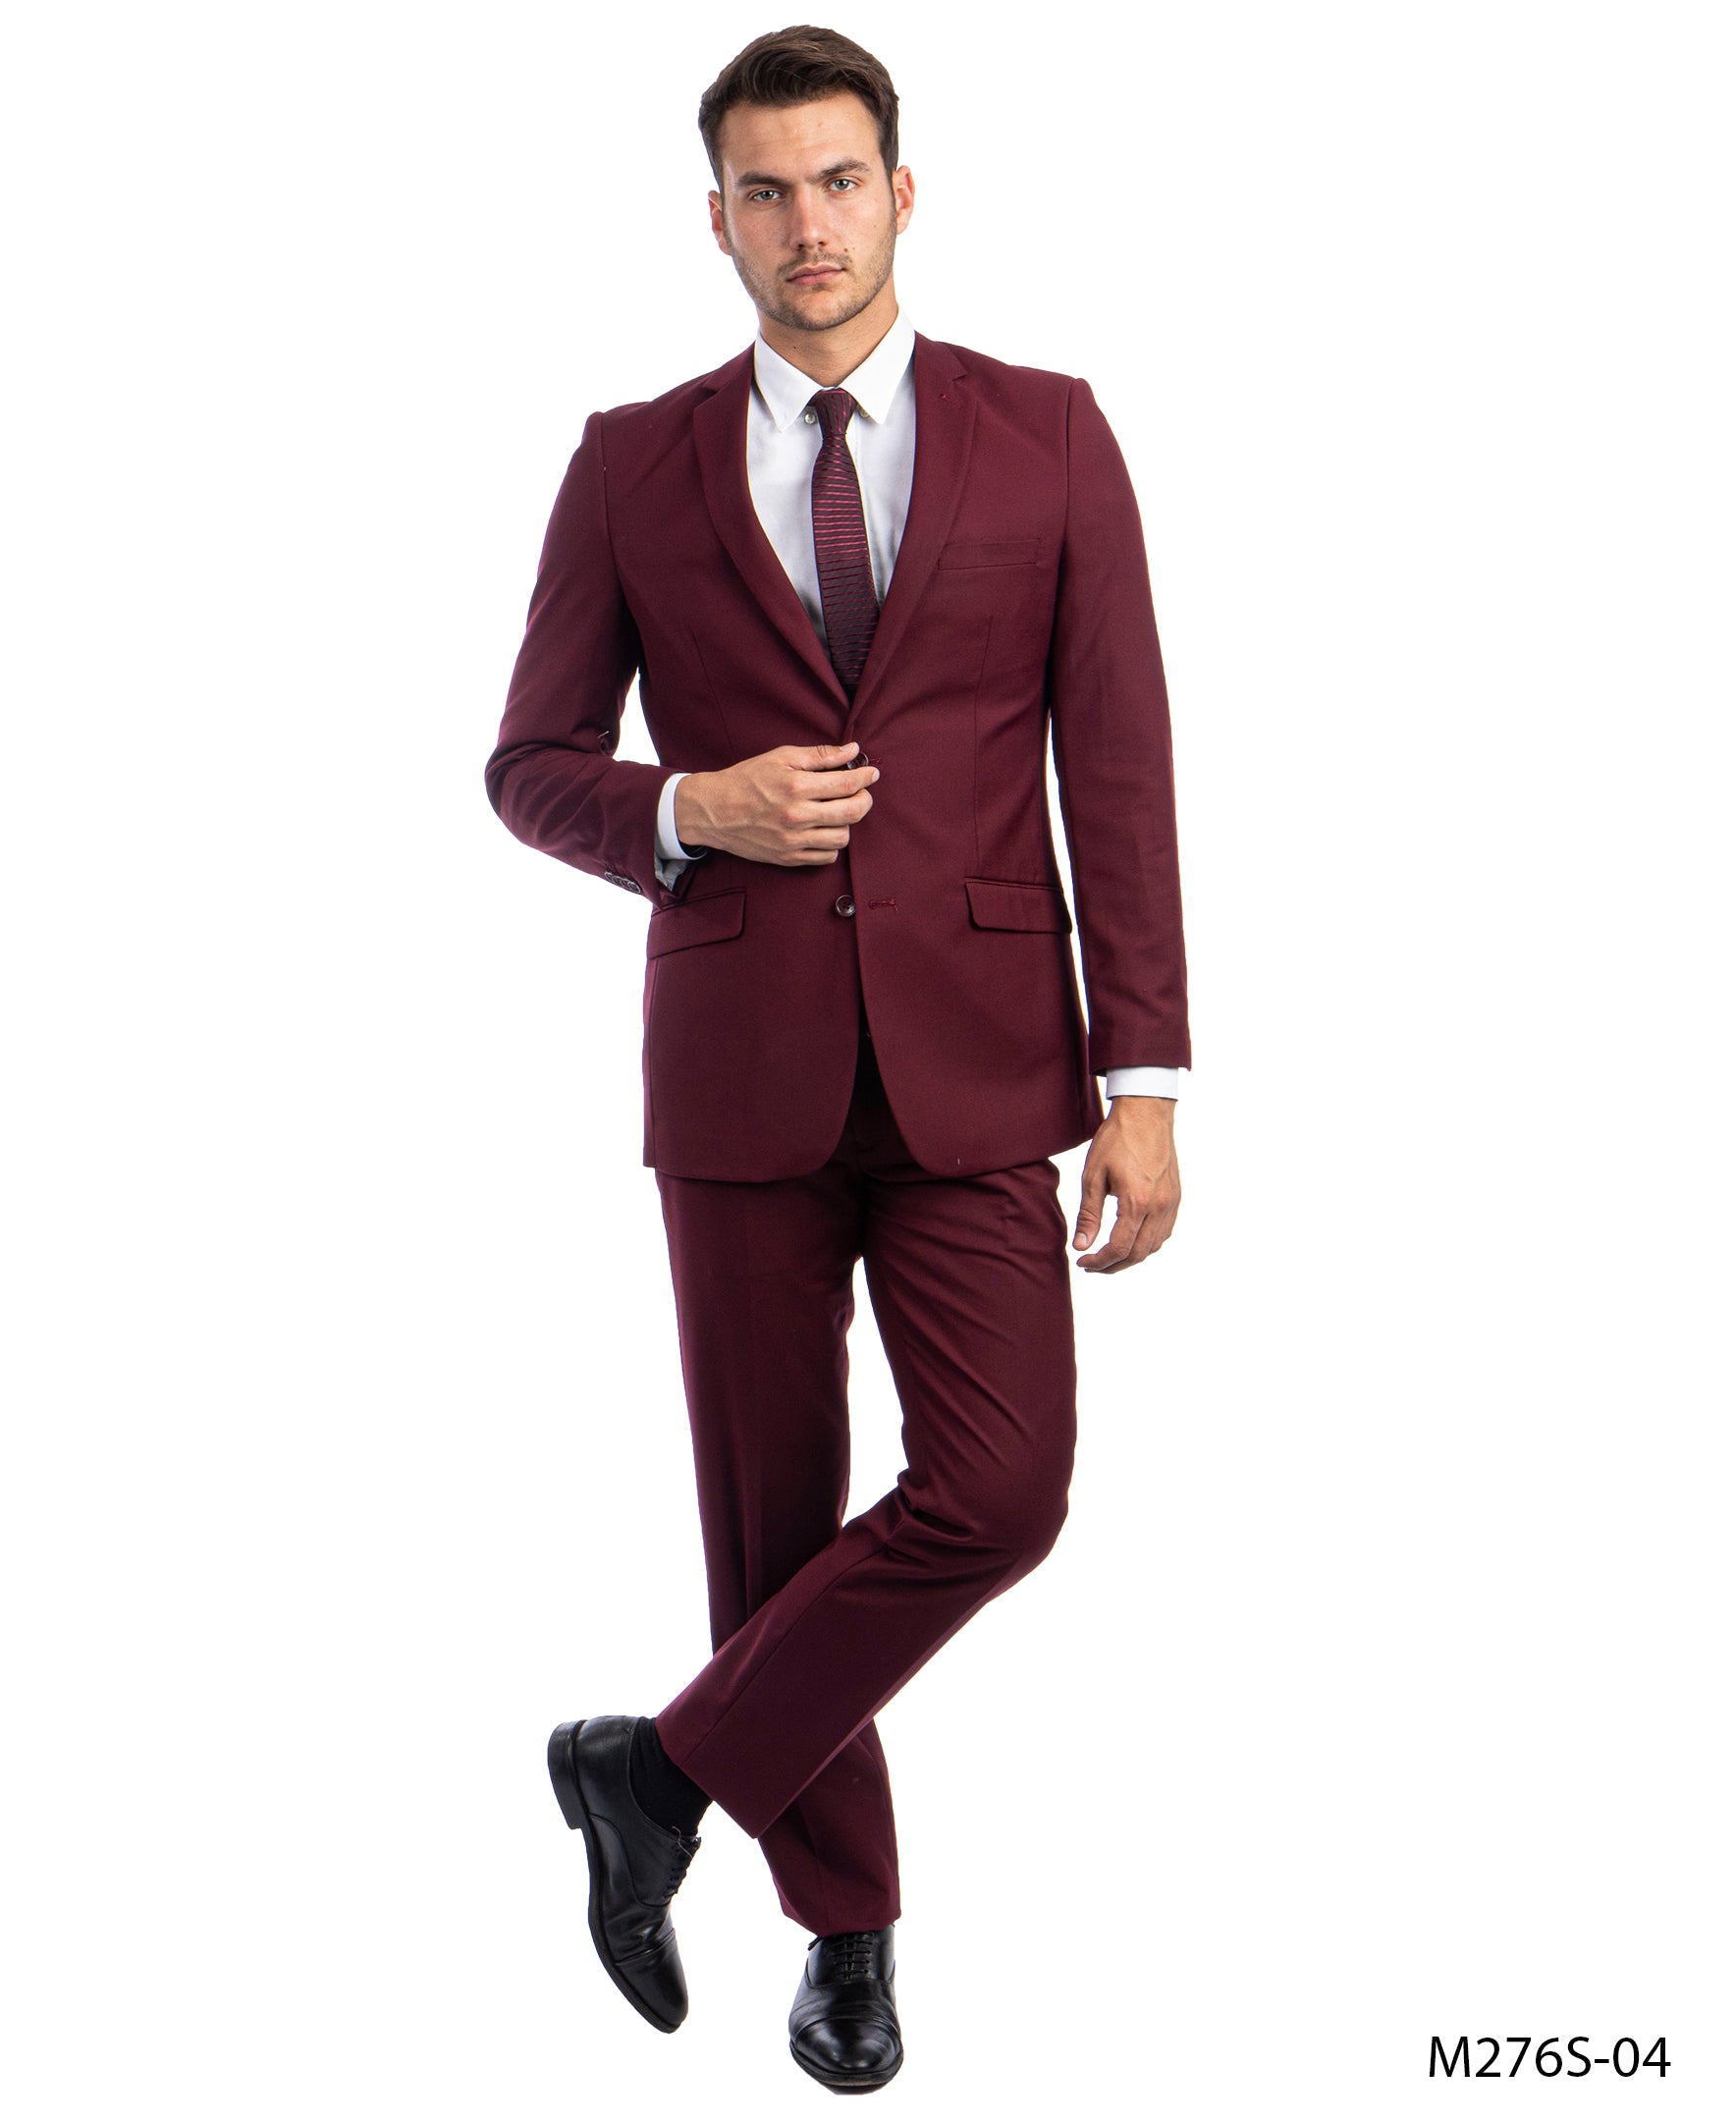 title:Azzuro Burgundy Suits 2 PC Slim Fit;color:Burgundy